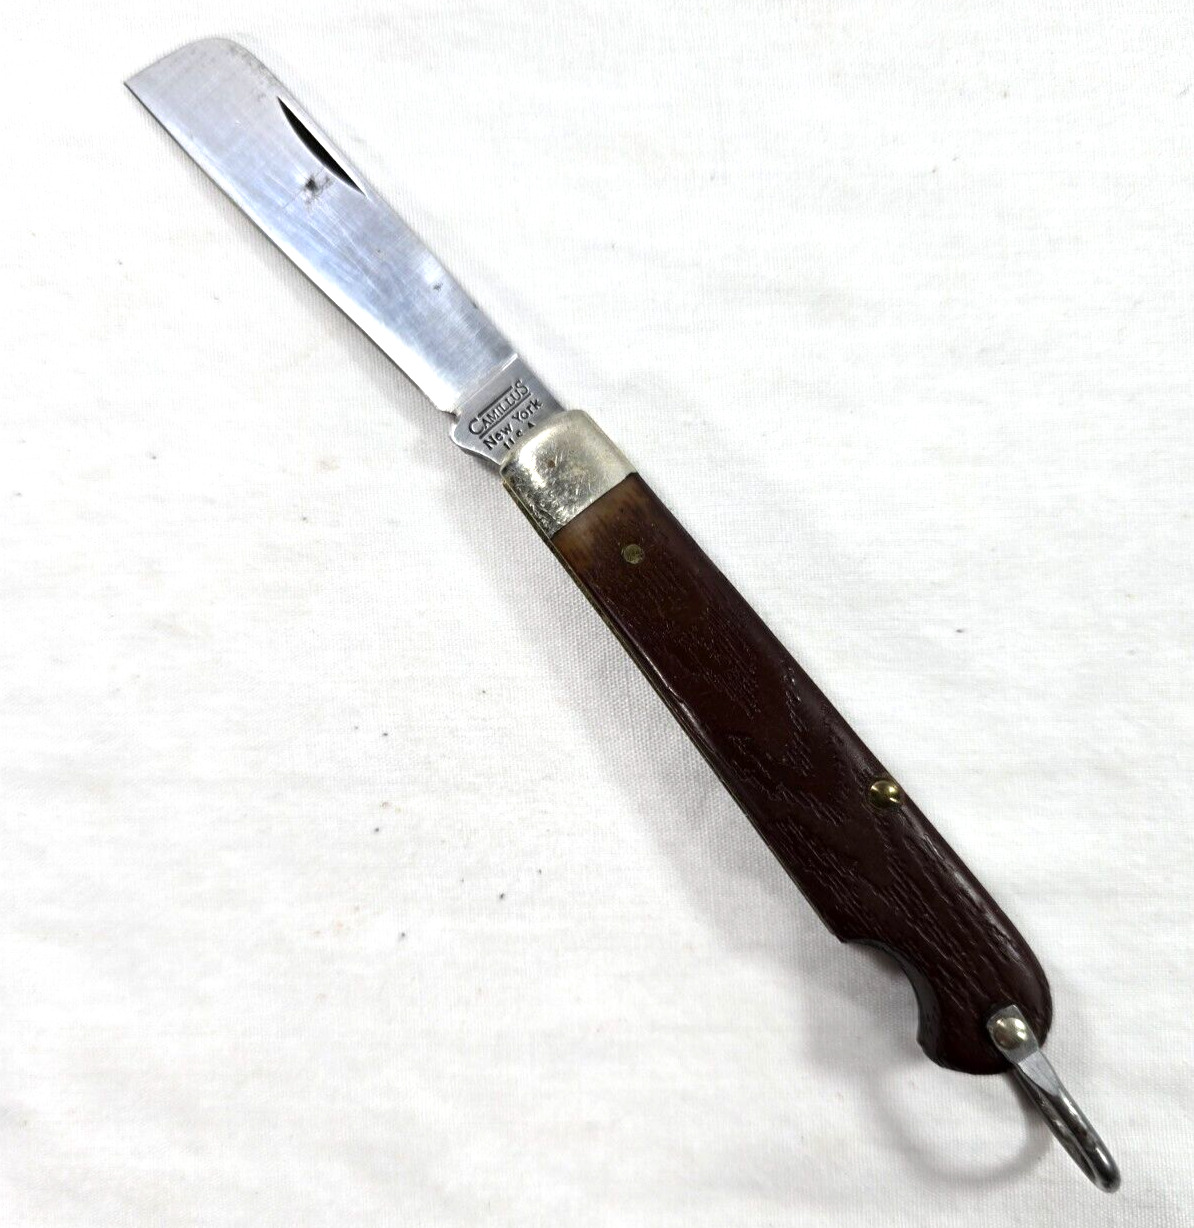 Camillus Cutlery Company Utility Pocketknife - Made in USA